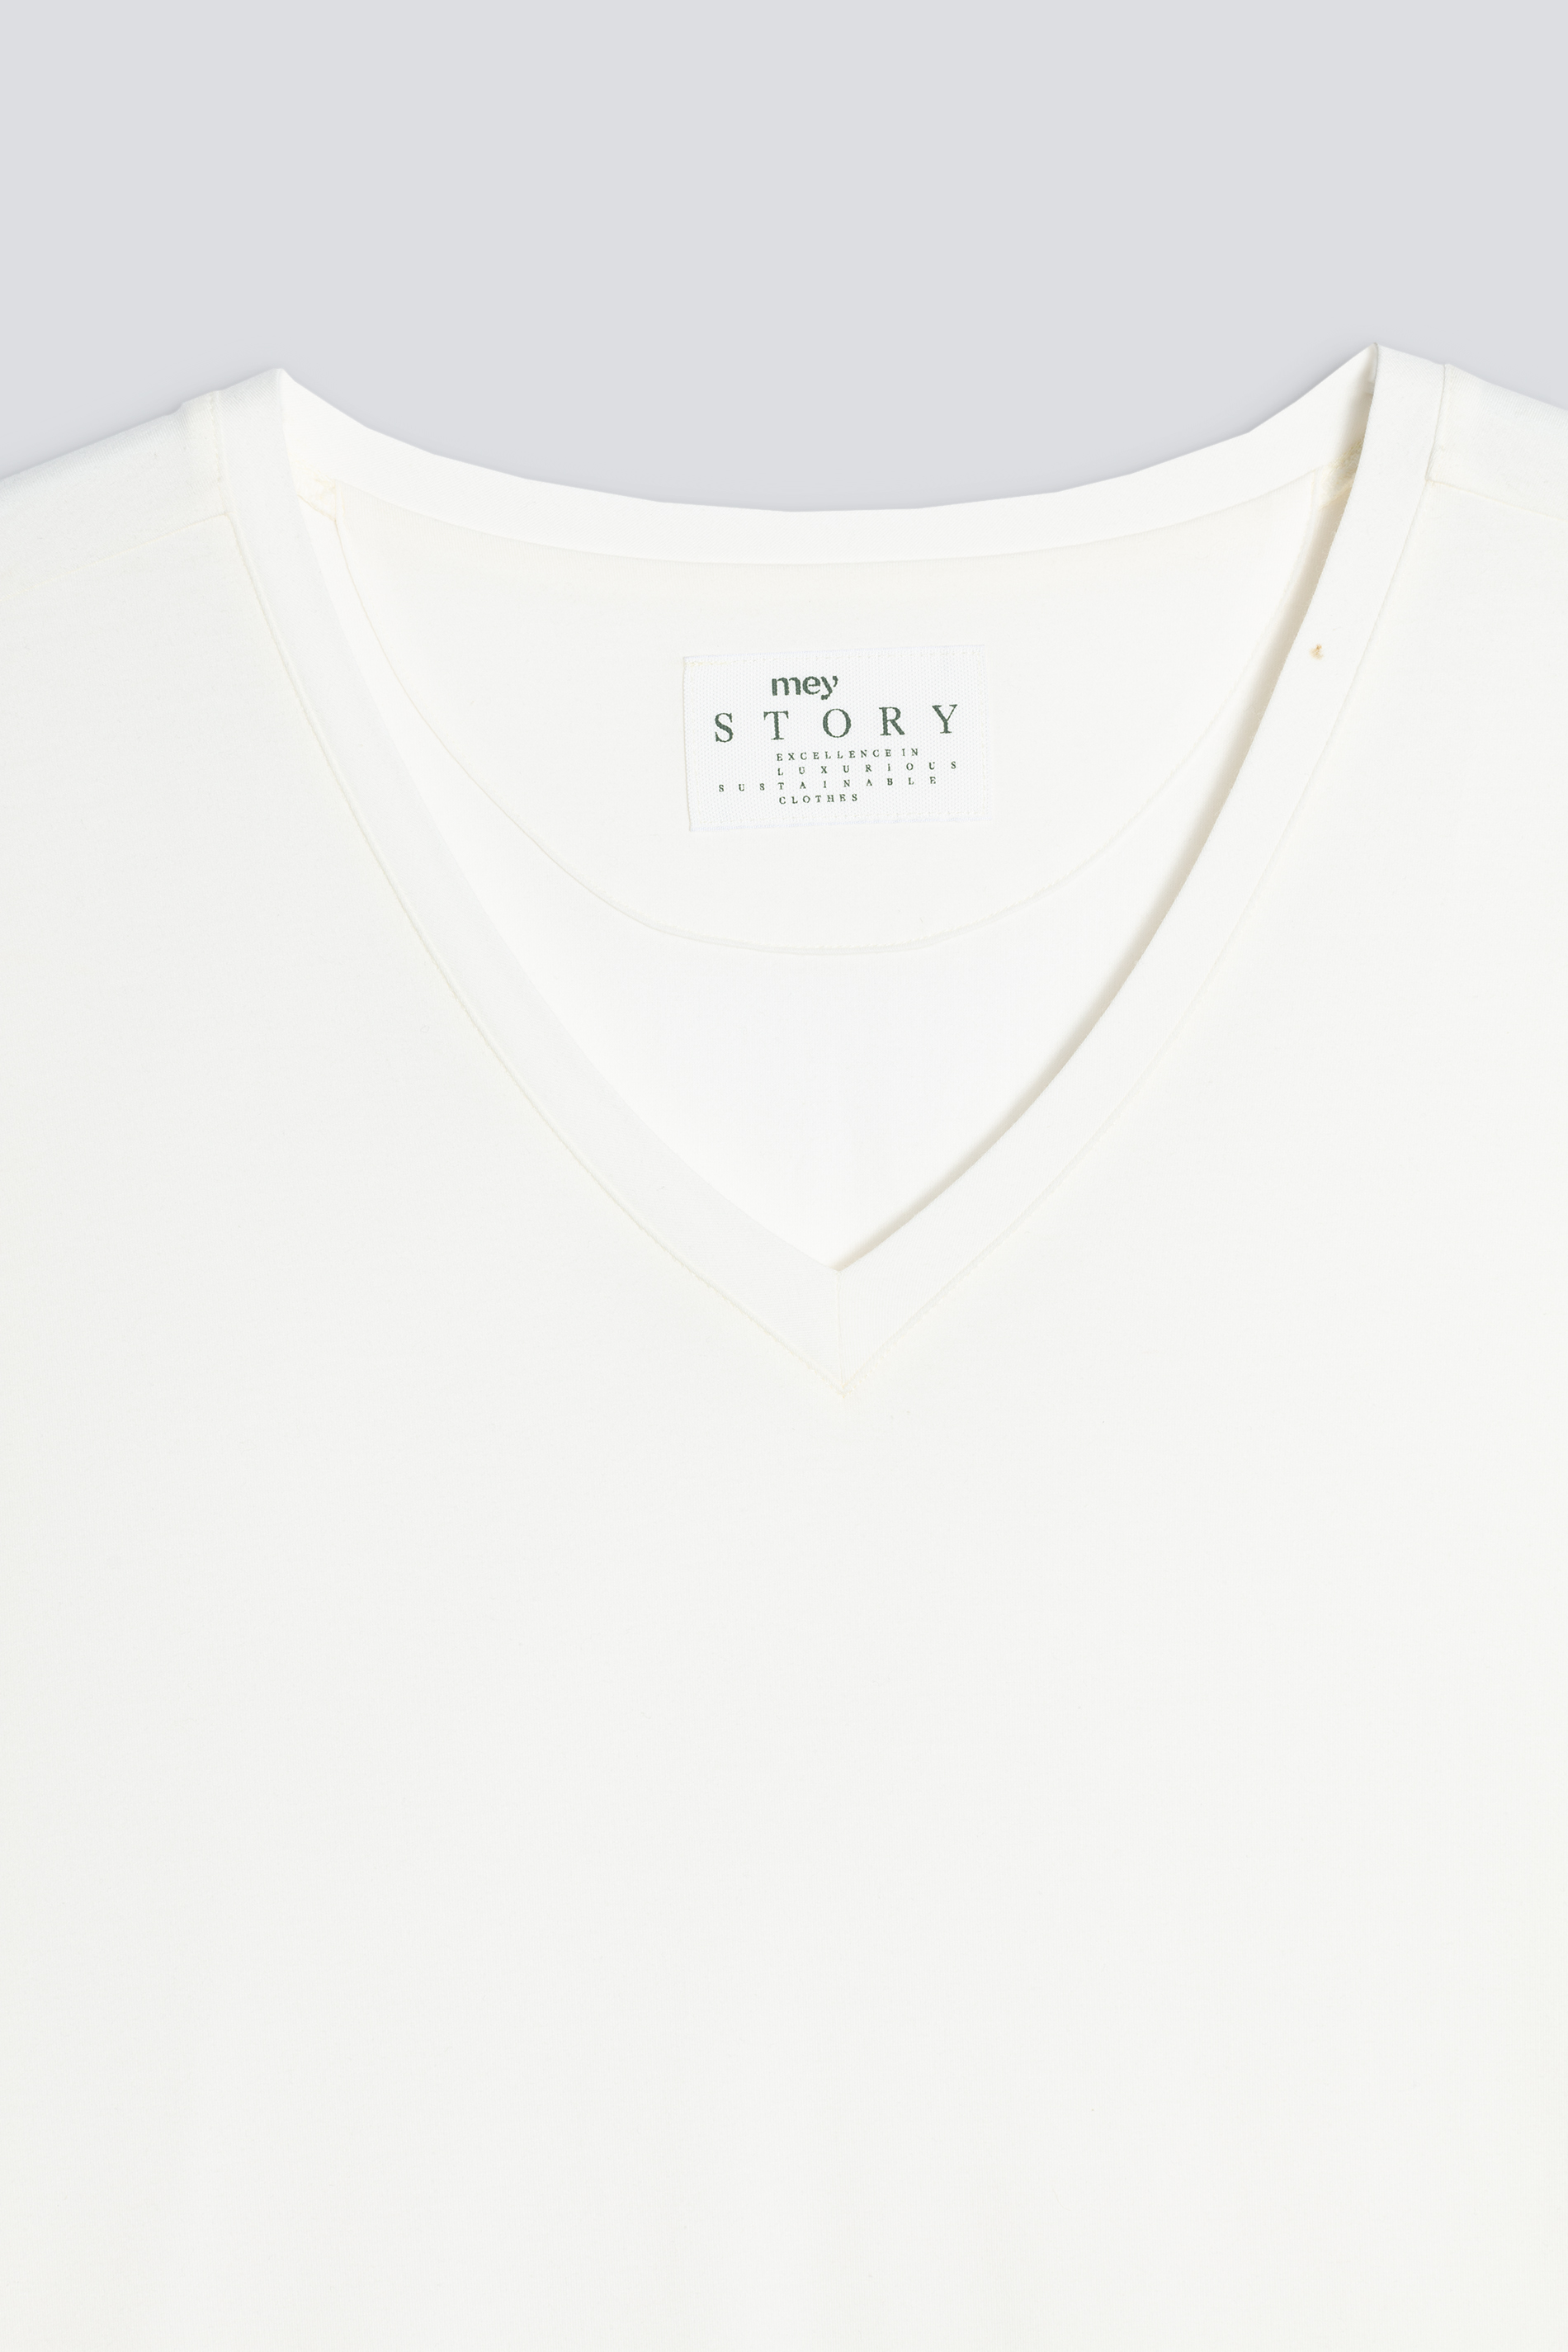 V-Neck T-Shirt Whisper White Serie Magila Singola Detailansicht 01 | mey®